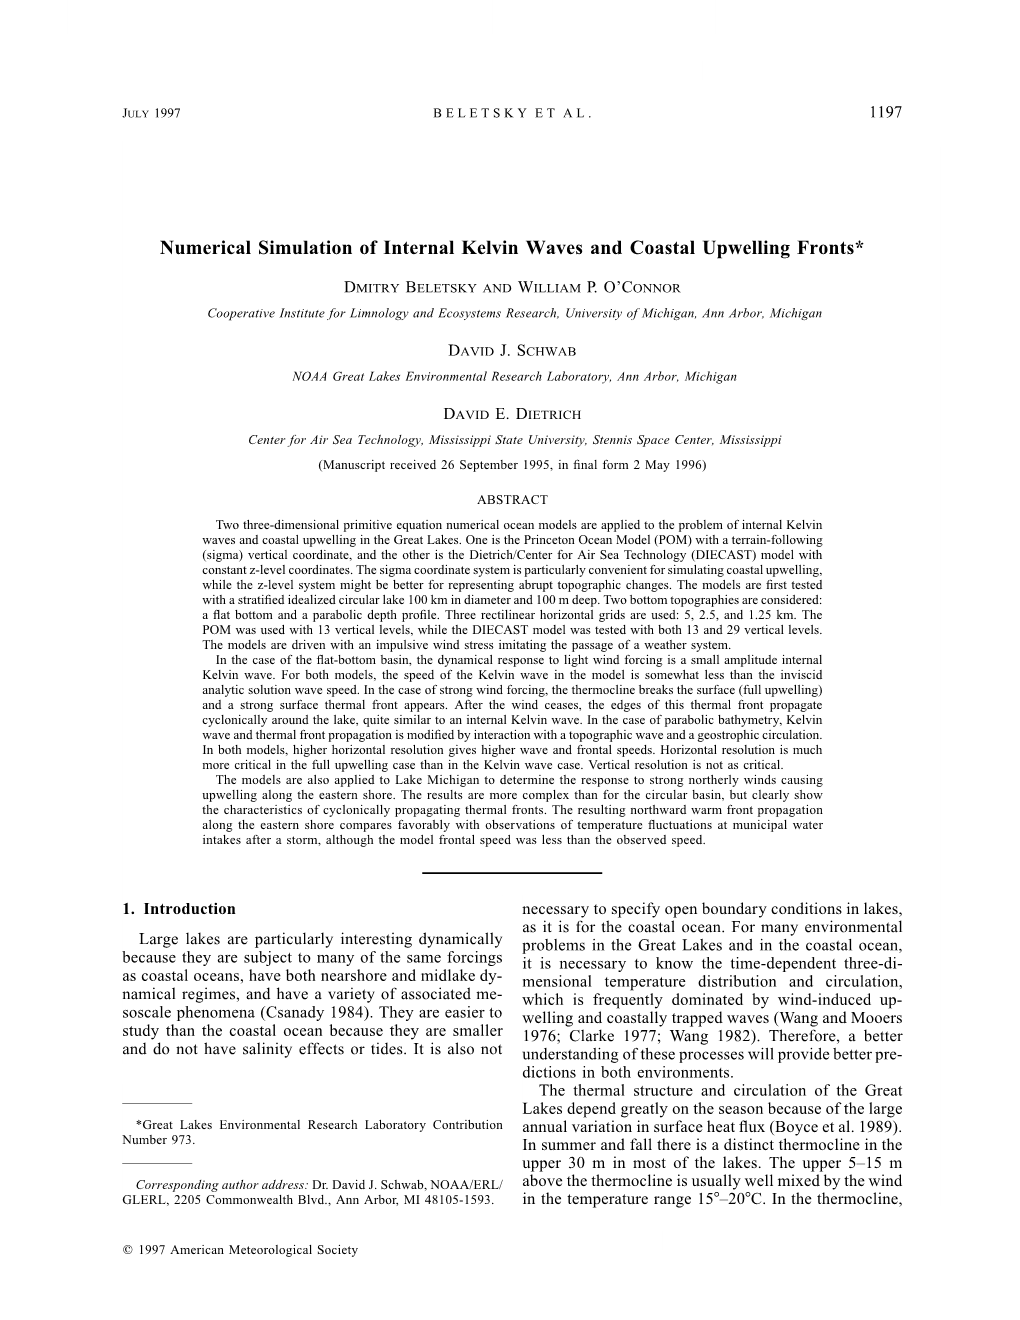 Numerical Simulation of Internal Kelvin Waves and Coastal Upwelling Fronts